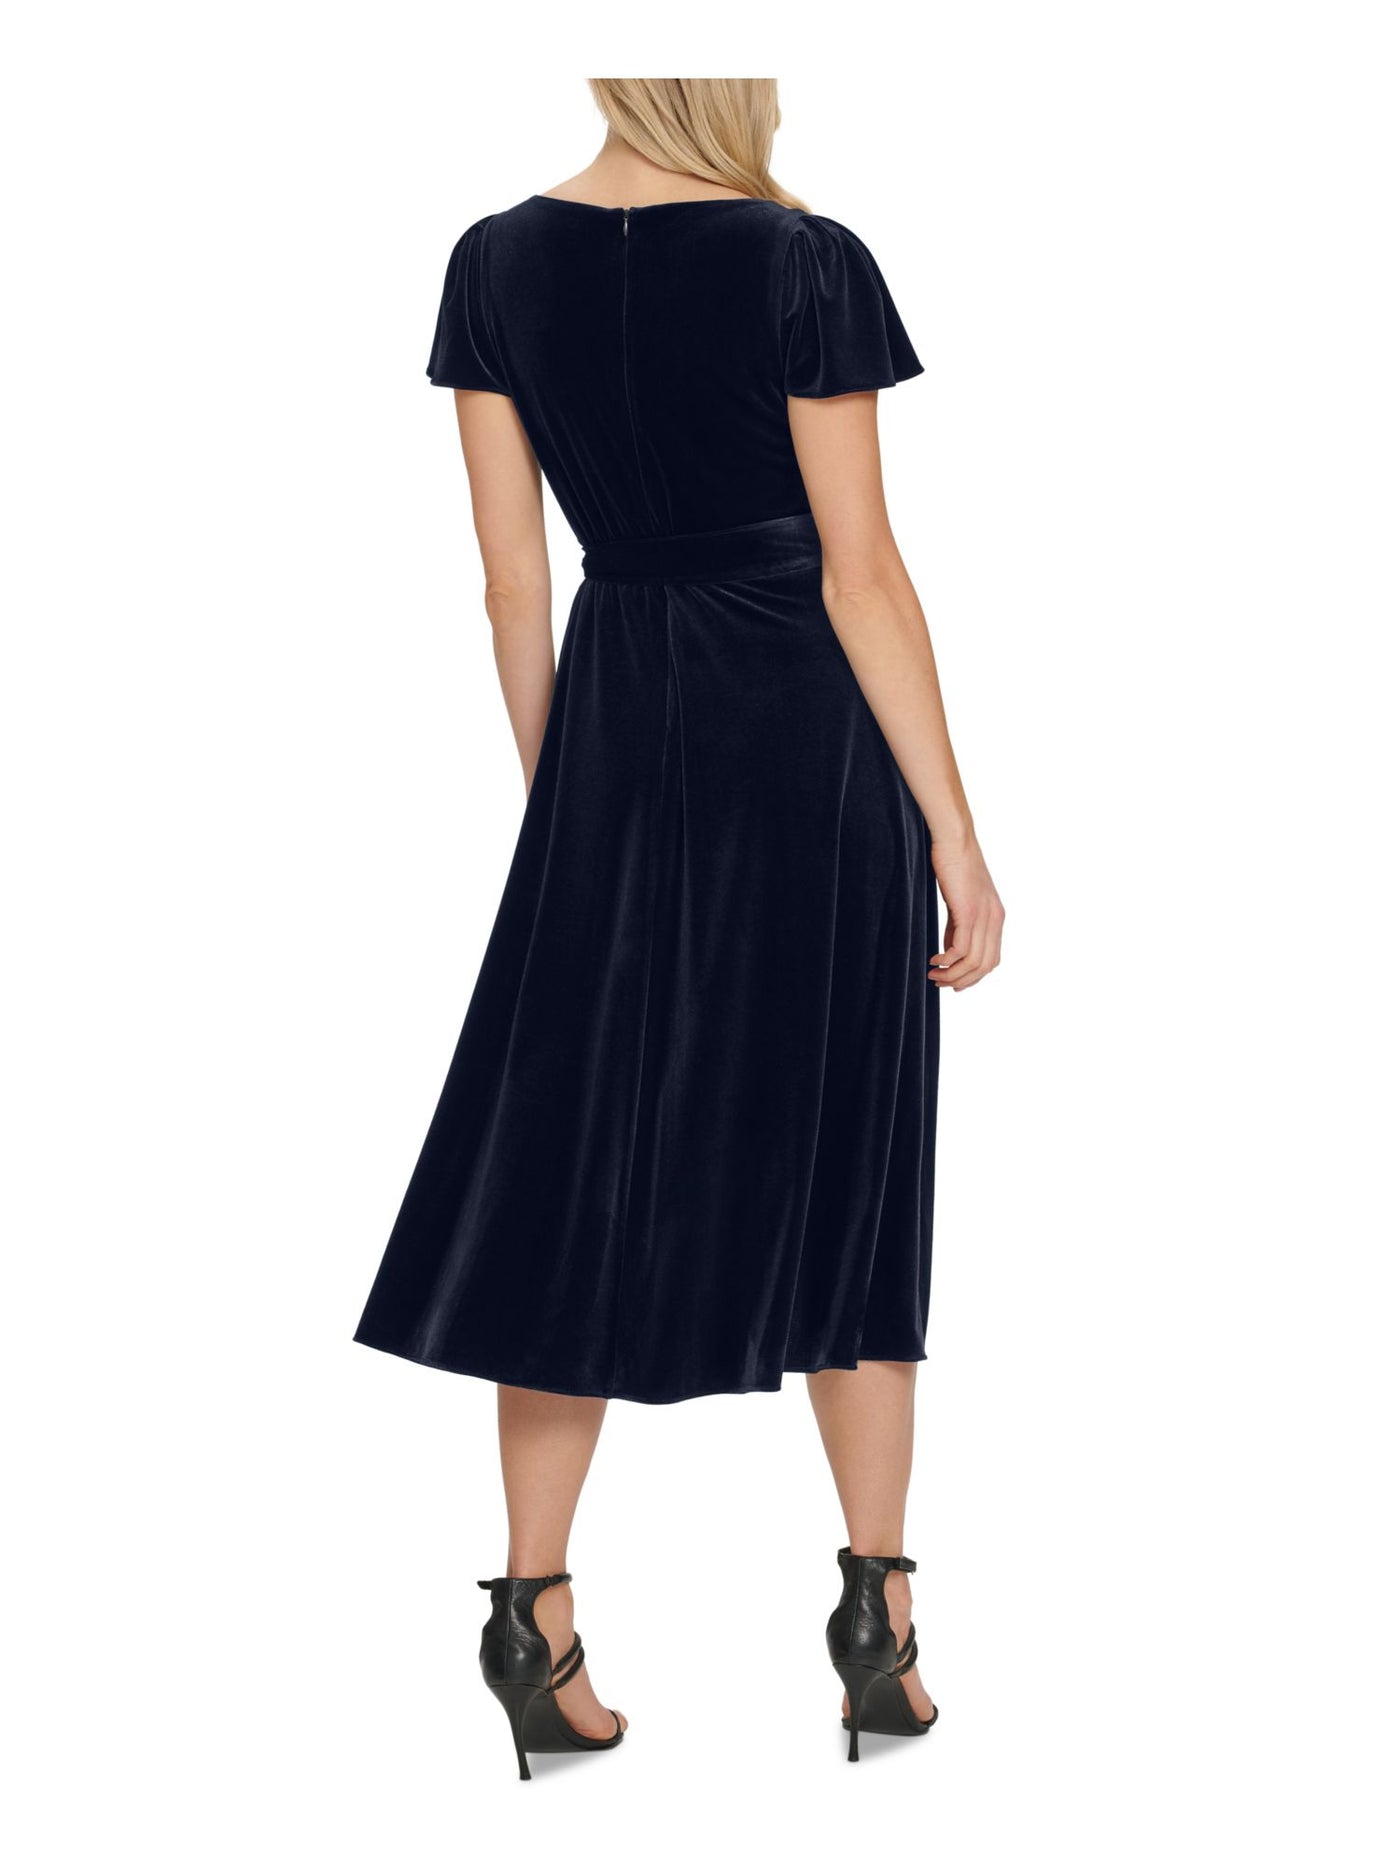 DKNY Womens Black Stretch Zippered Tie Velvet Lined Polka Dot Pouf Sleeve Surplice Neckline Above The Knee Evening Fit + Flare Dress 14